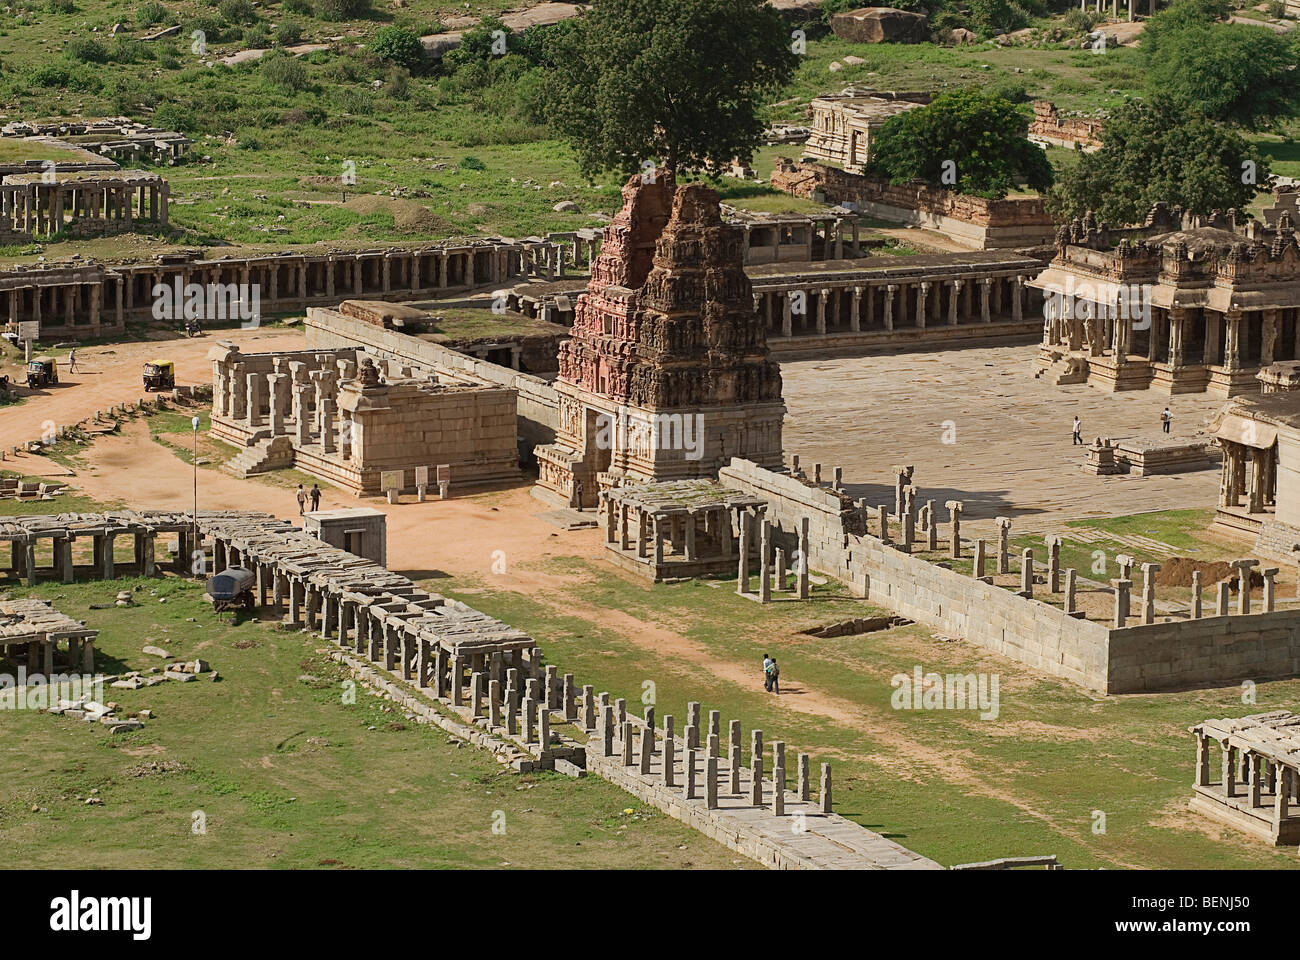 Aerial view of Vitthala Temple built in the 15th century A.D. during the reign of King Krishna Deva Raya Hampi Kartanaka India Stock Photo